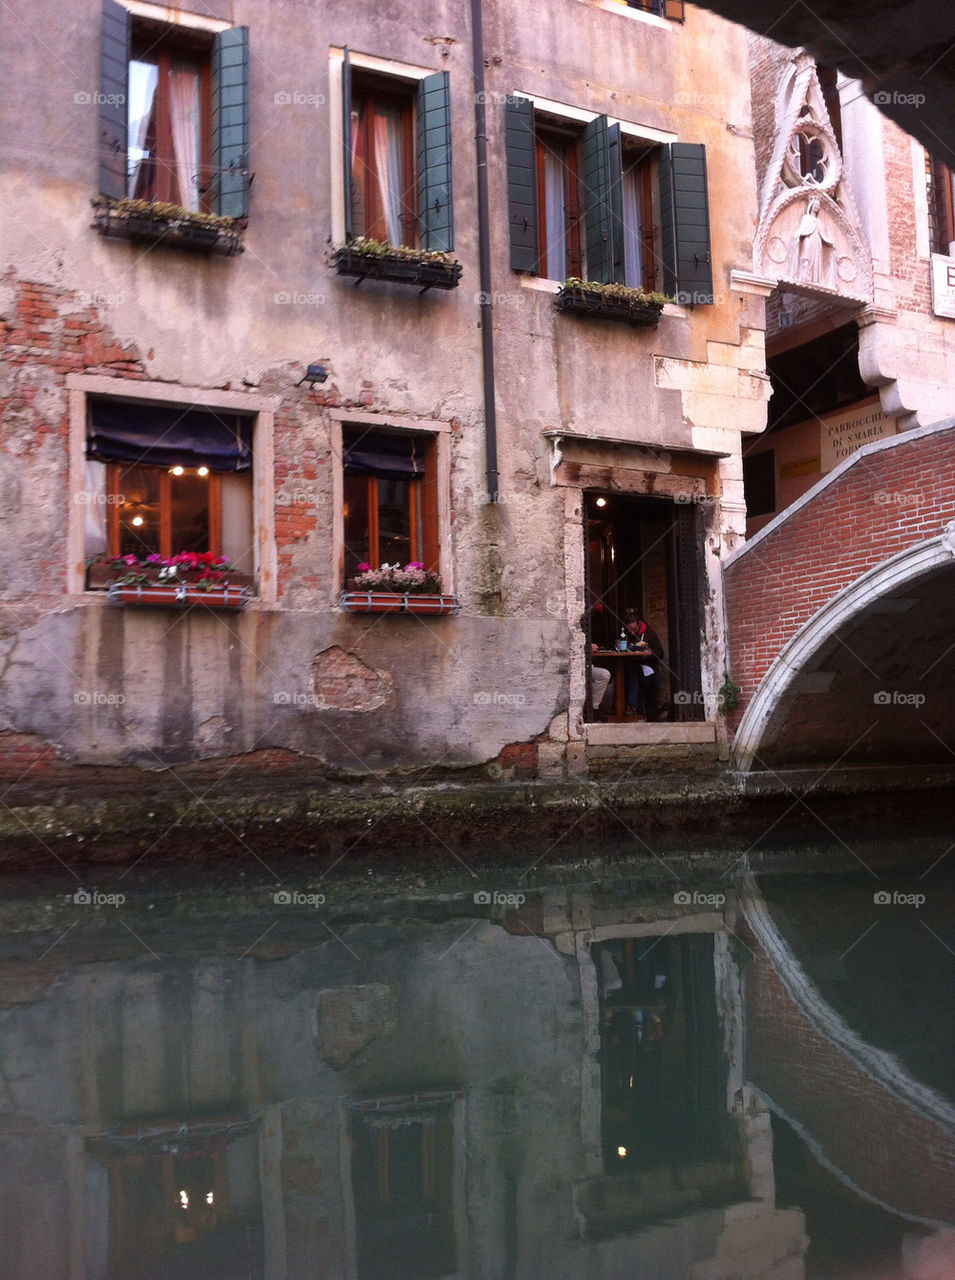 italy bridge canal venezia by penynorth